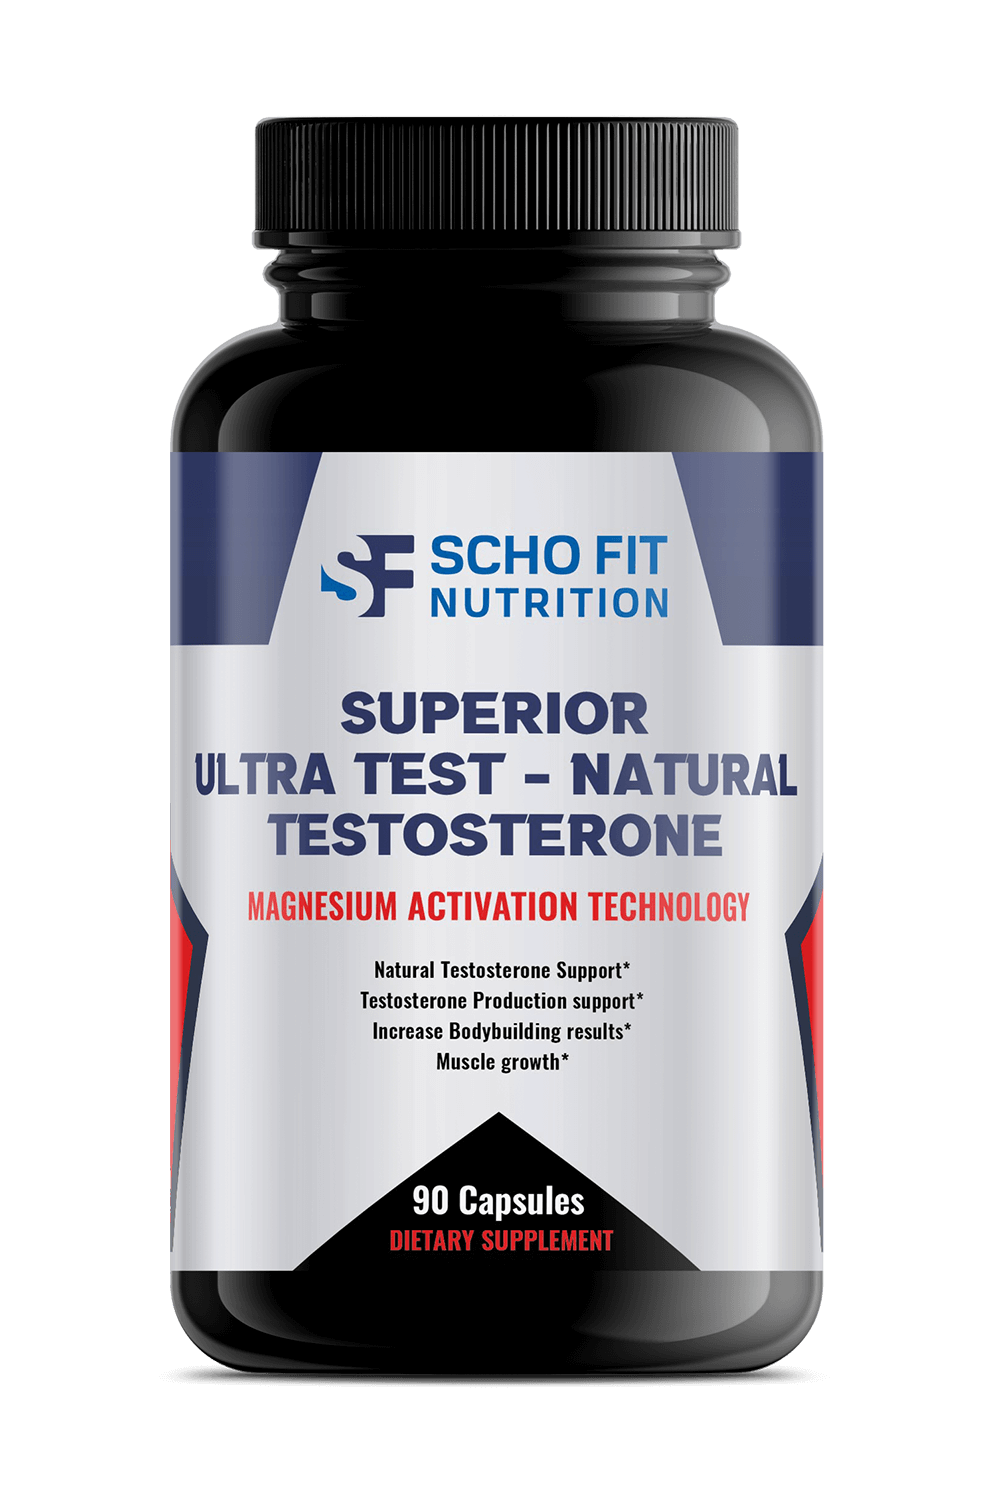 Superior Ultra Test - Natural Testosterone